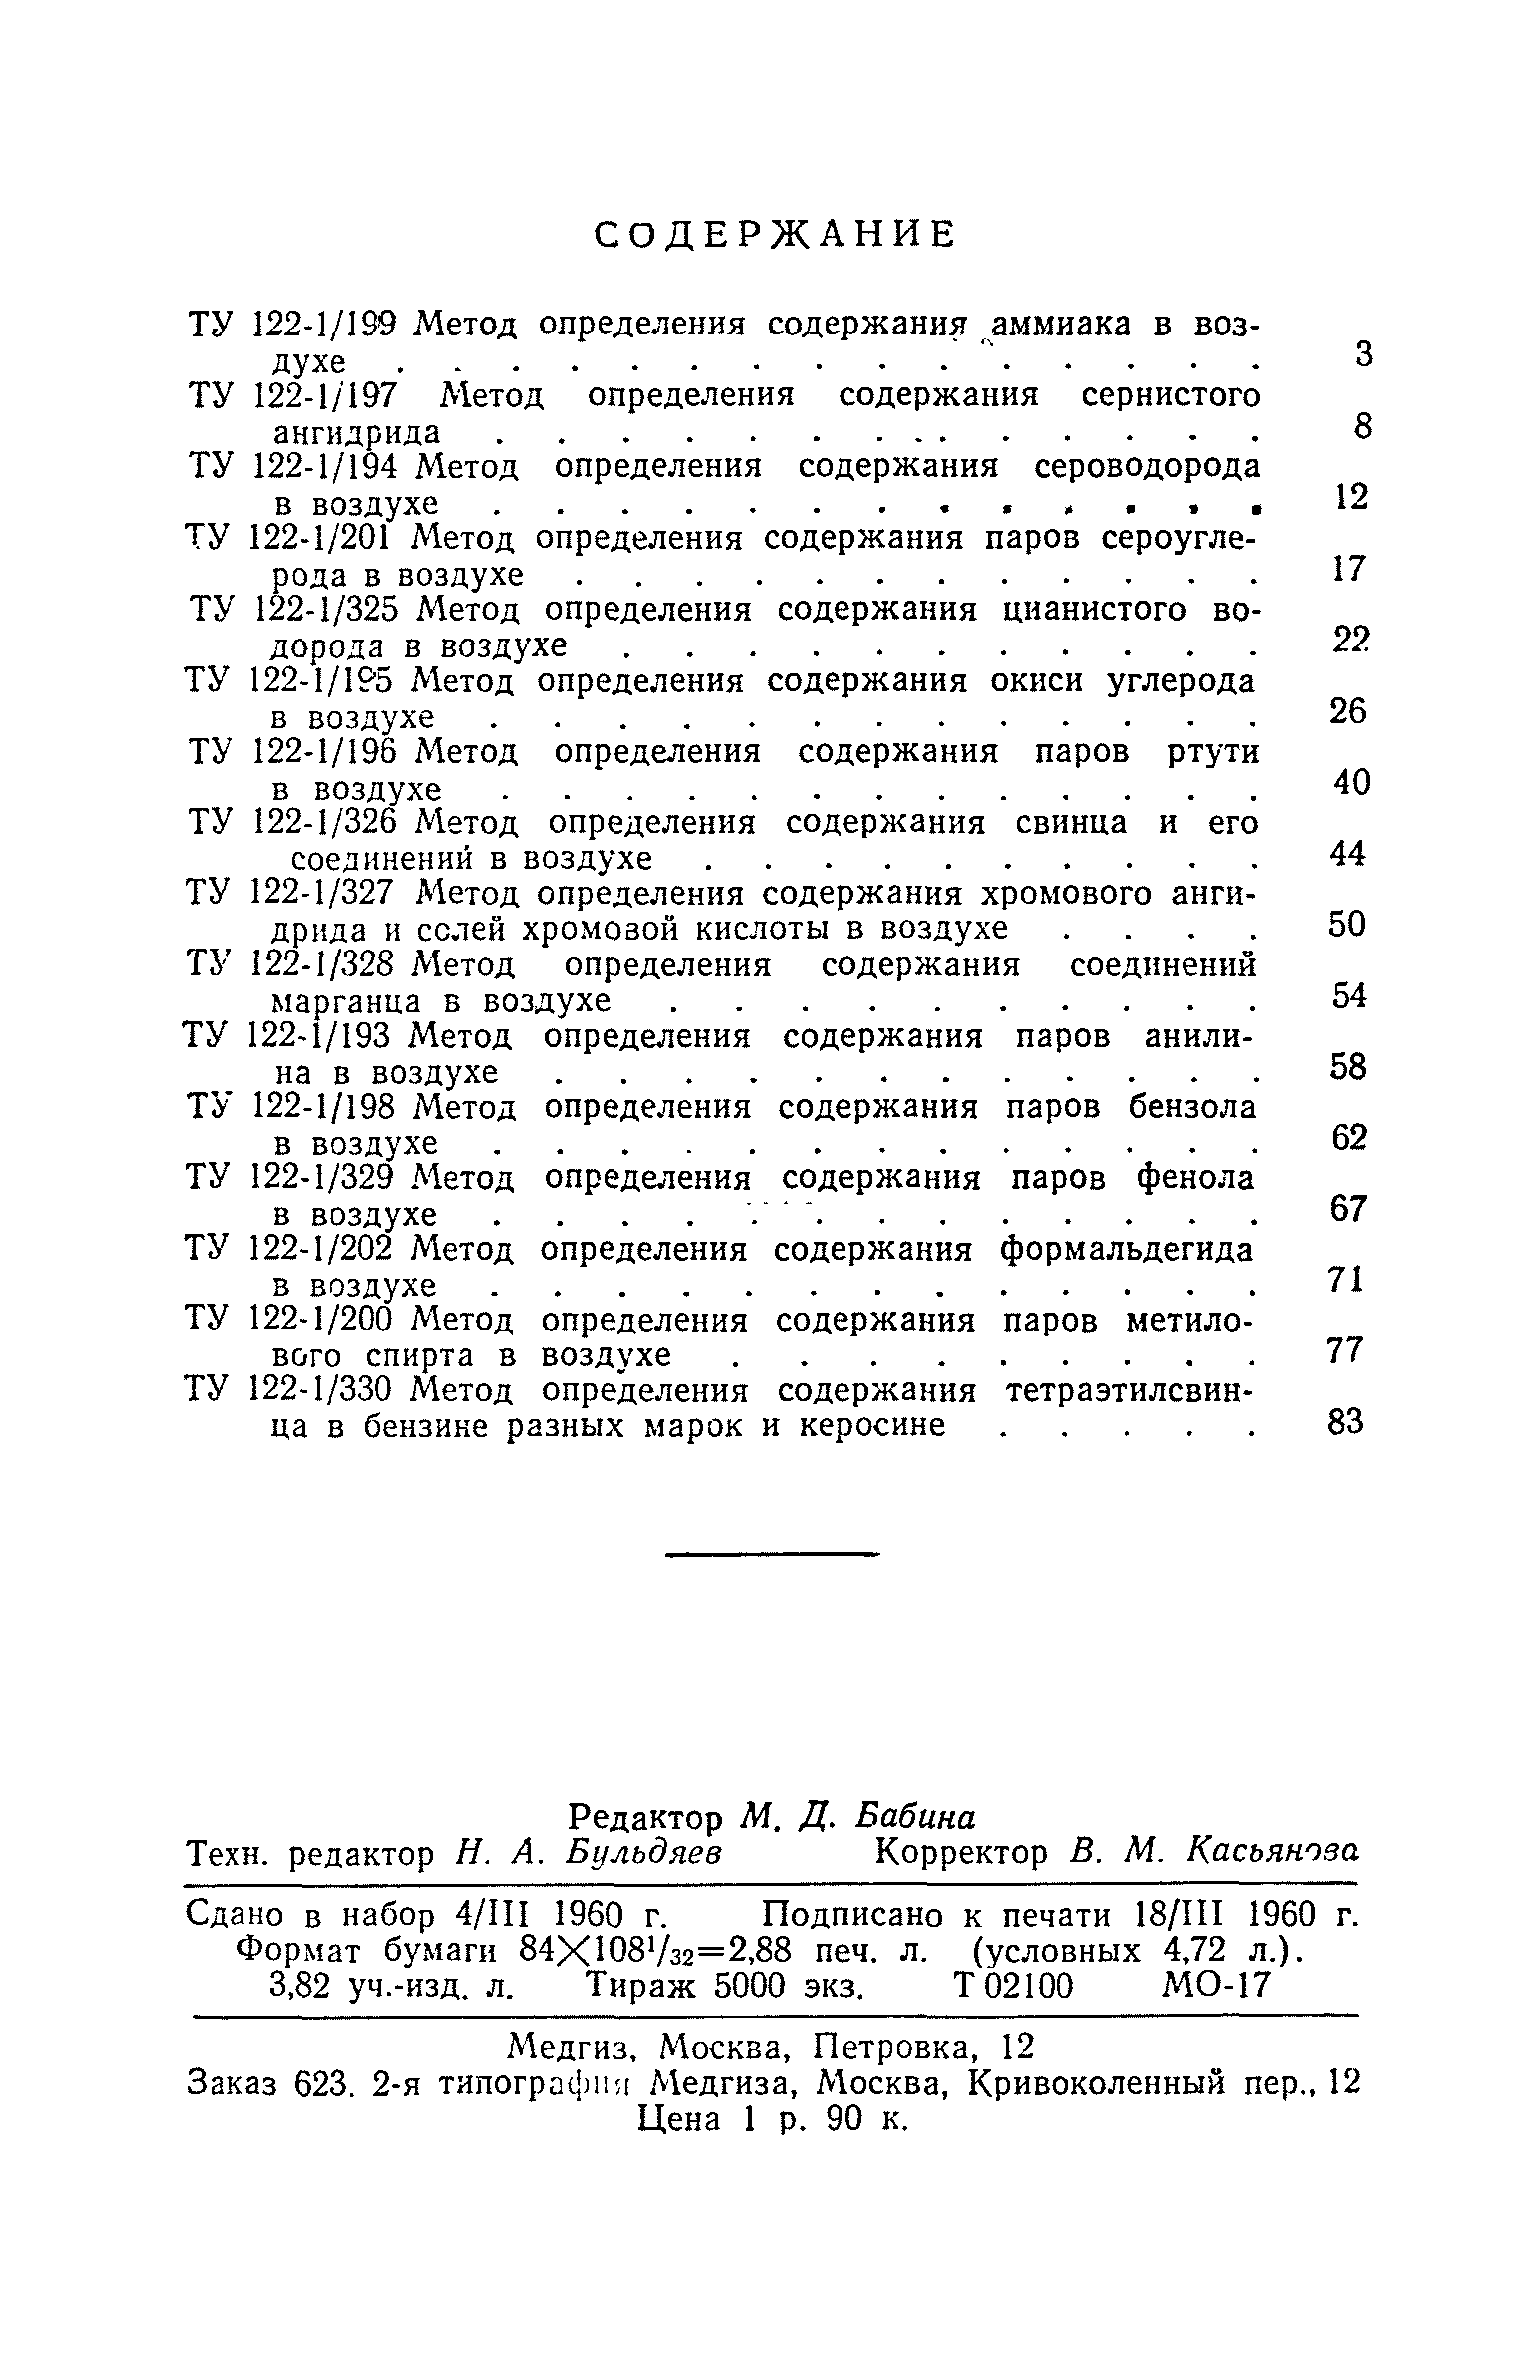 ТУ 122-1/193